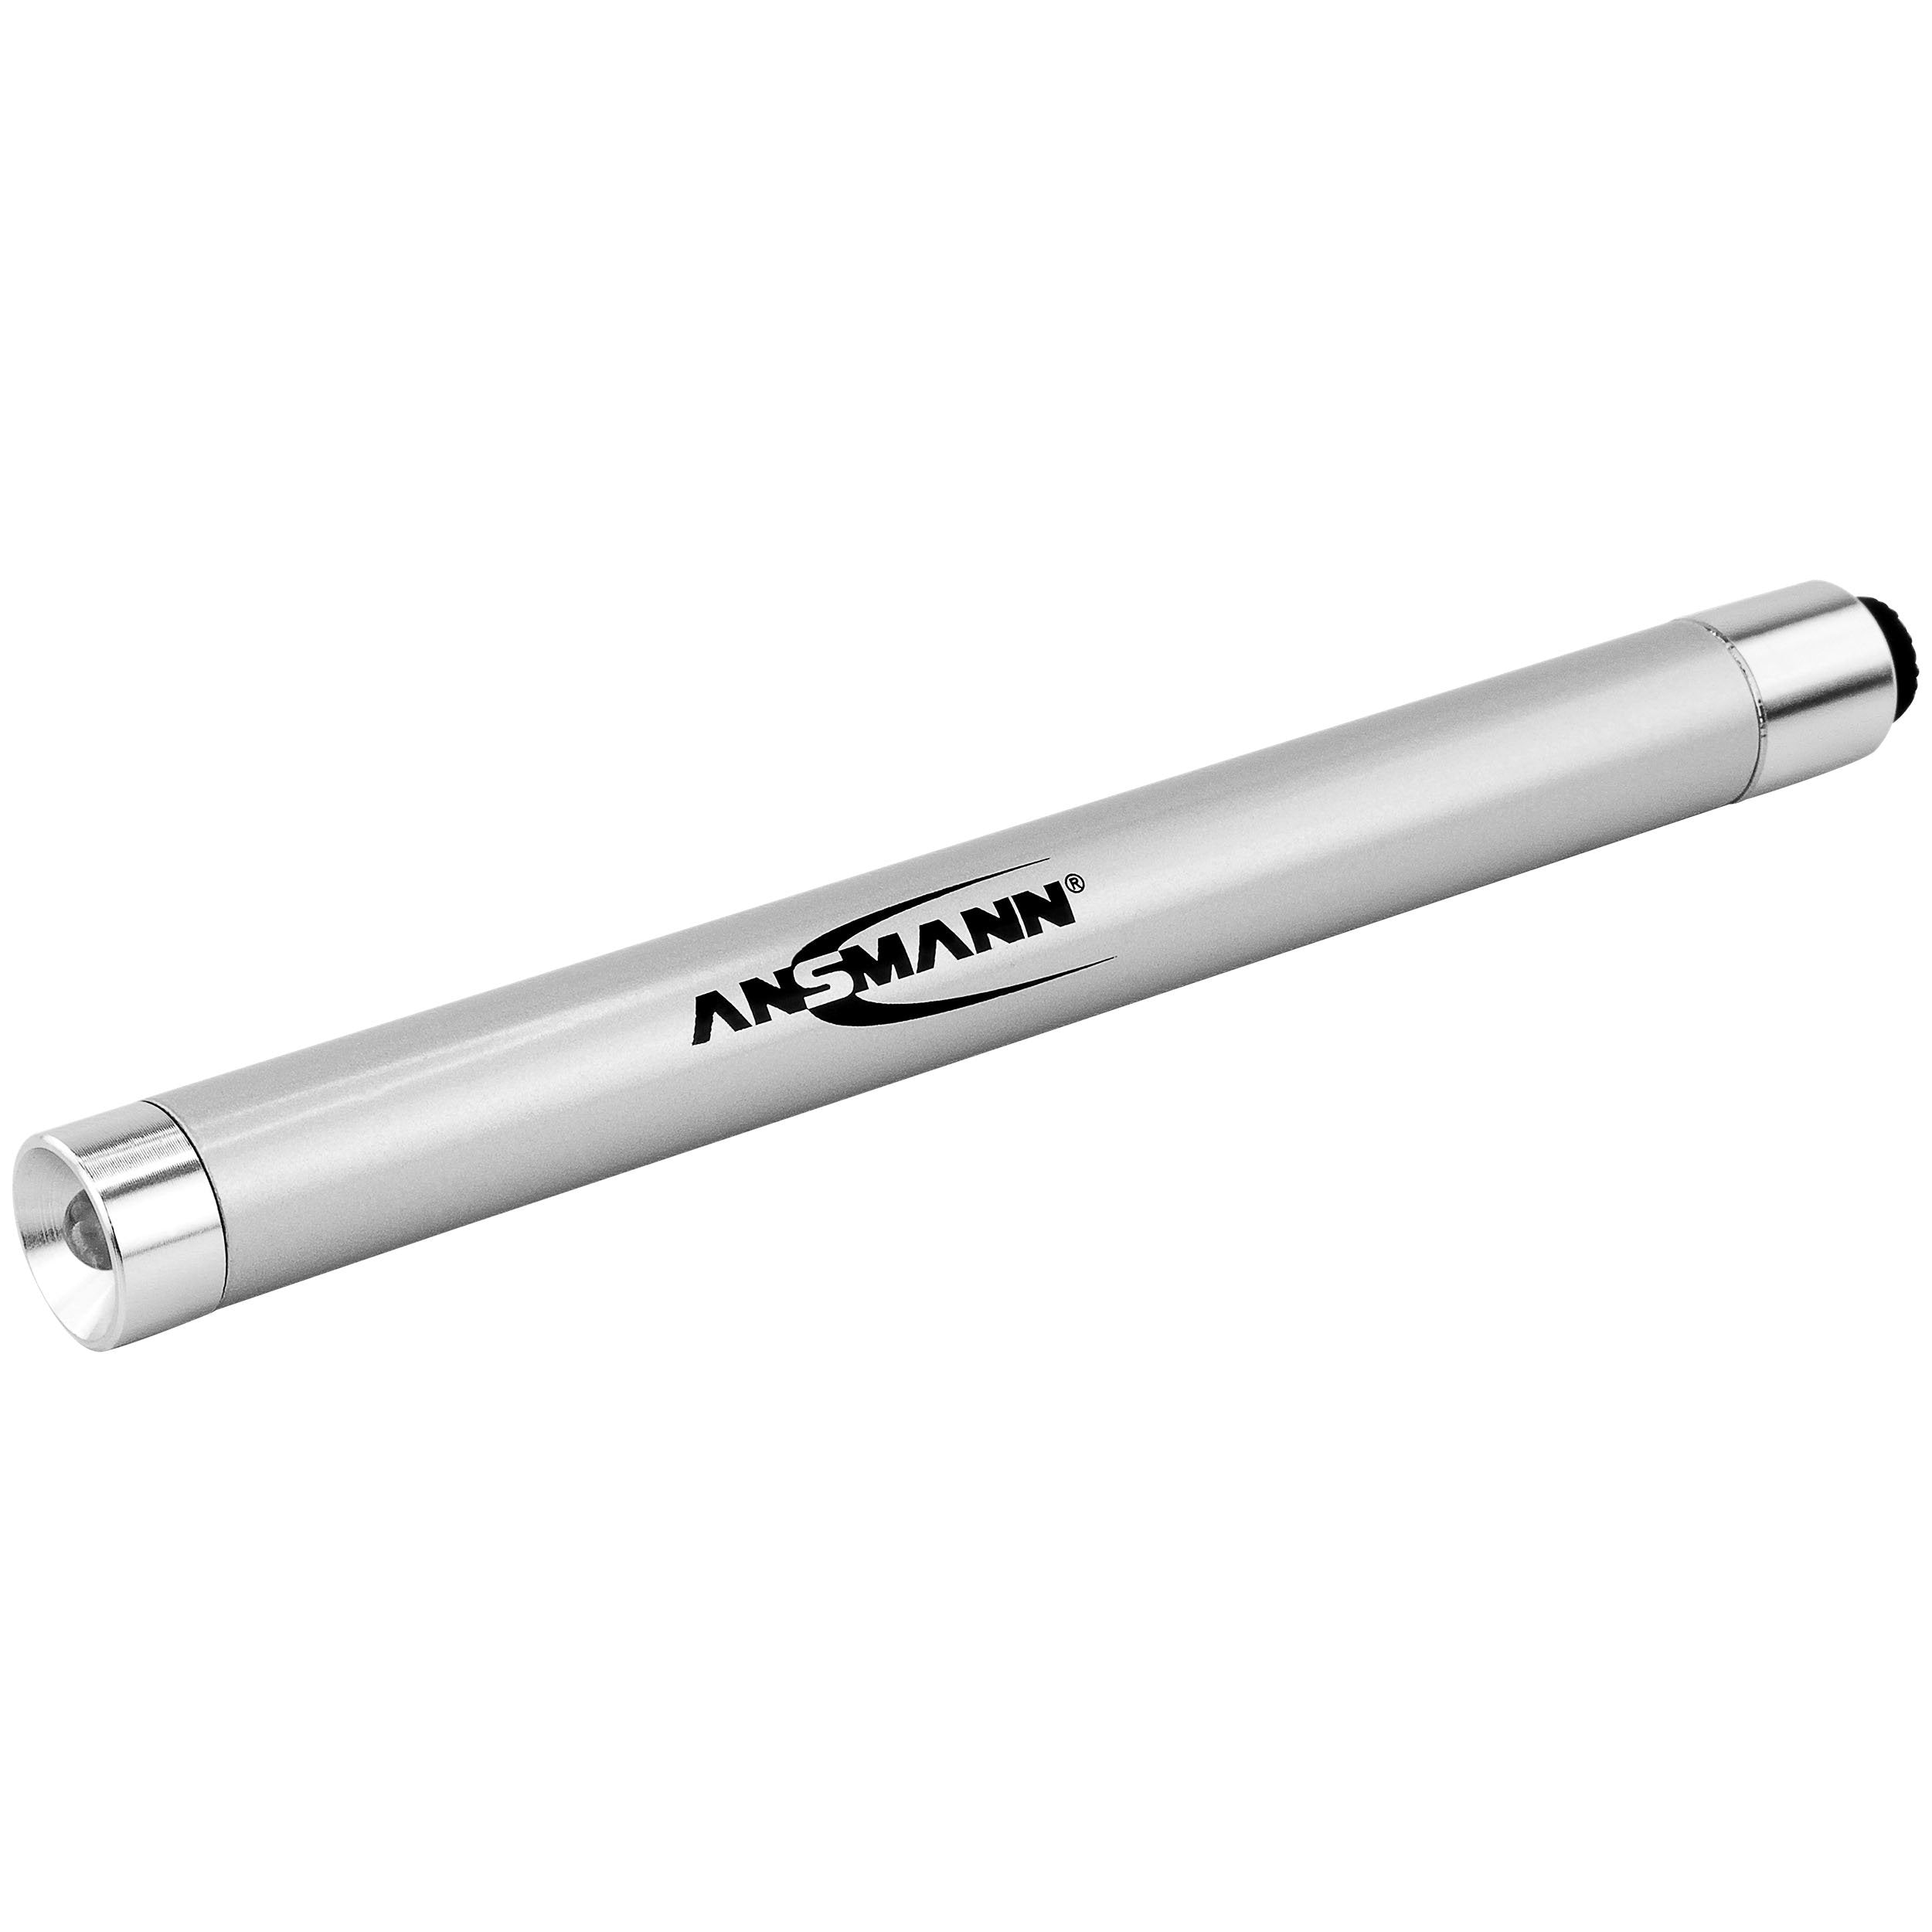 ANSMANN 1600-0169 X15 Small and Handy LED penlight, Aluminium, Silver